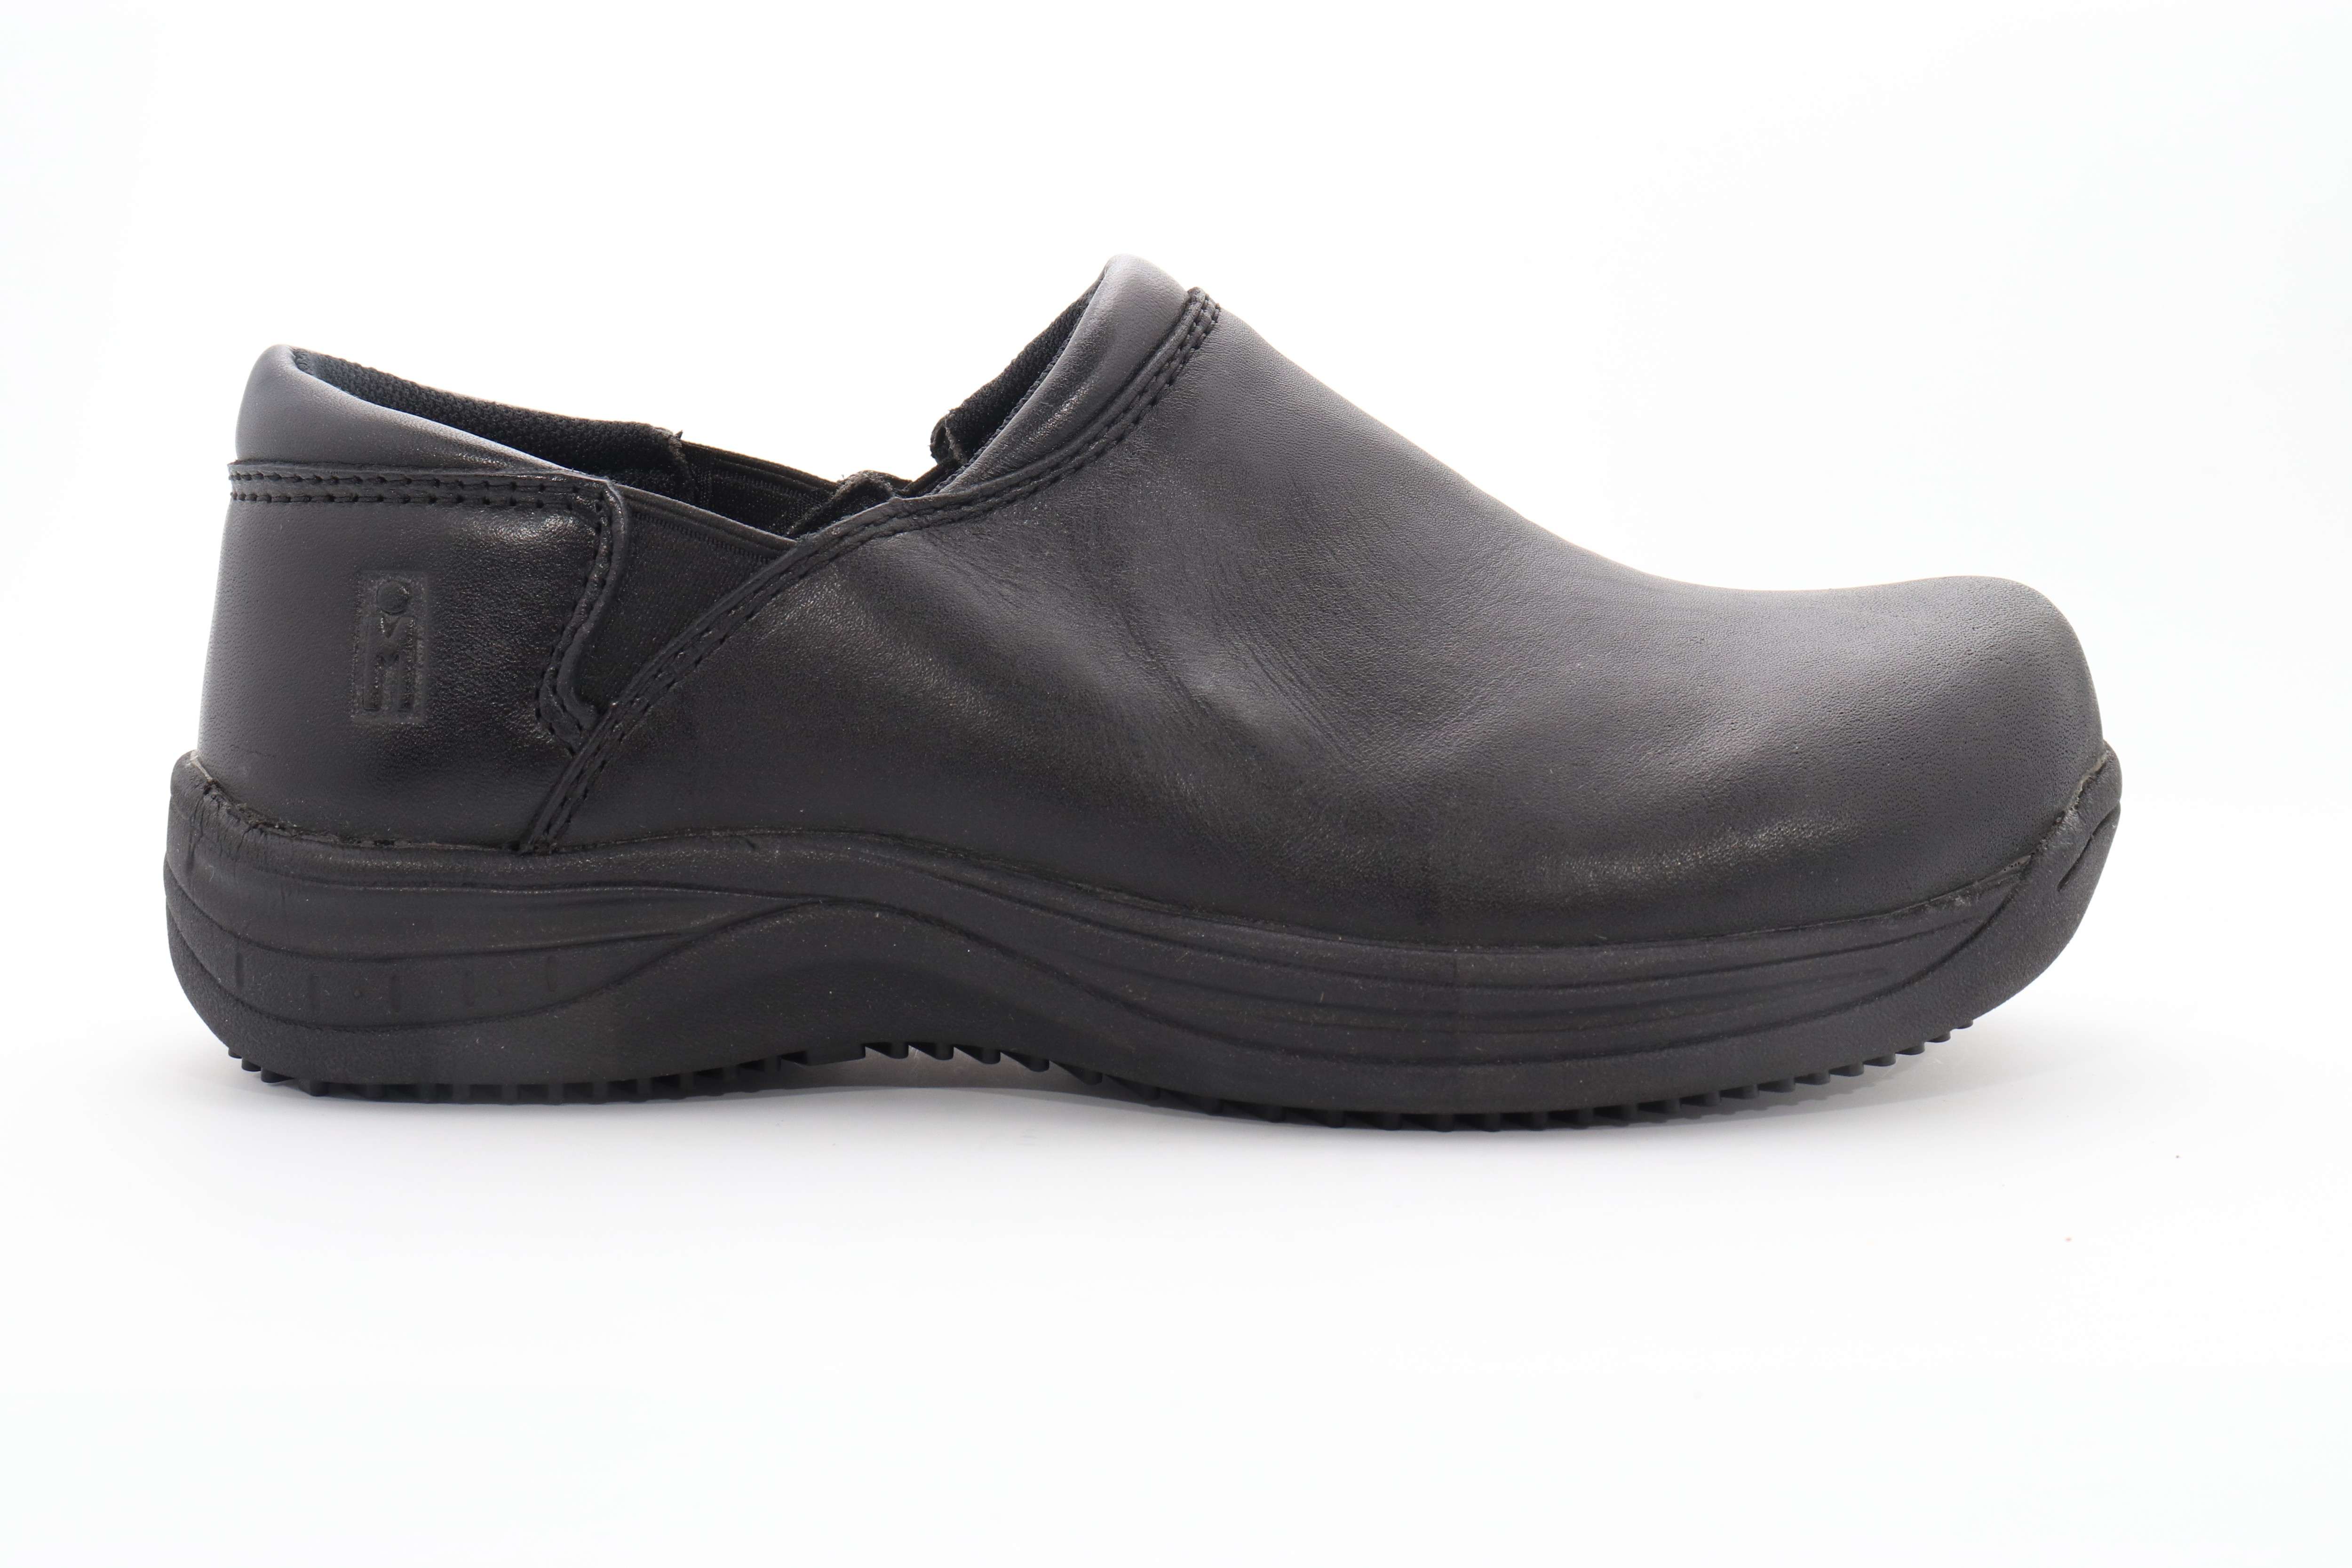 Mozo Forza Slip On Work Crew Shoes Non Slip Women's Size US 7.5 () | eBay